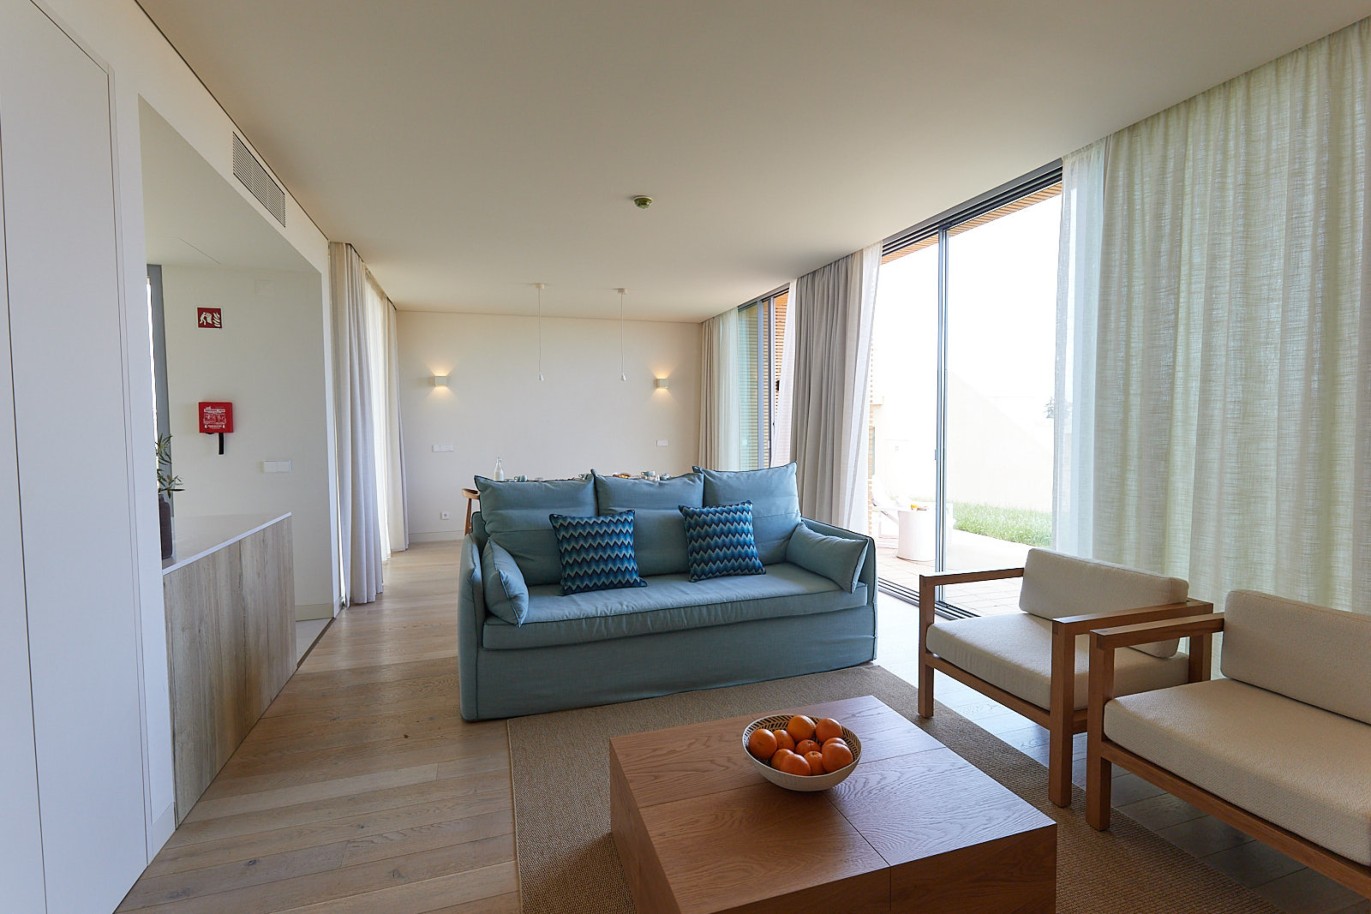 2 bedroom apartment in resort, for sale in Porches, Algarve_230683